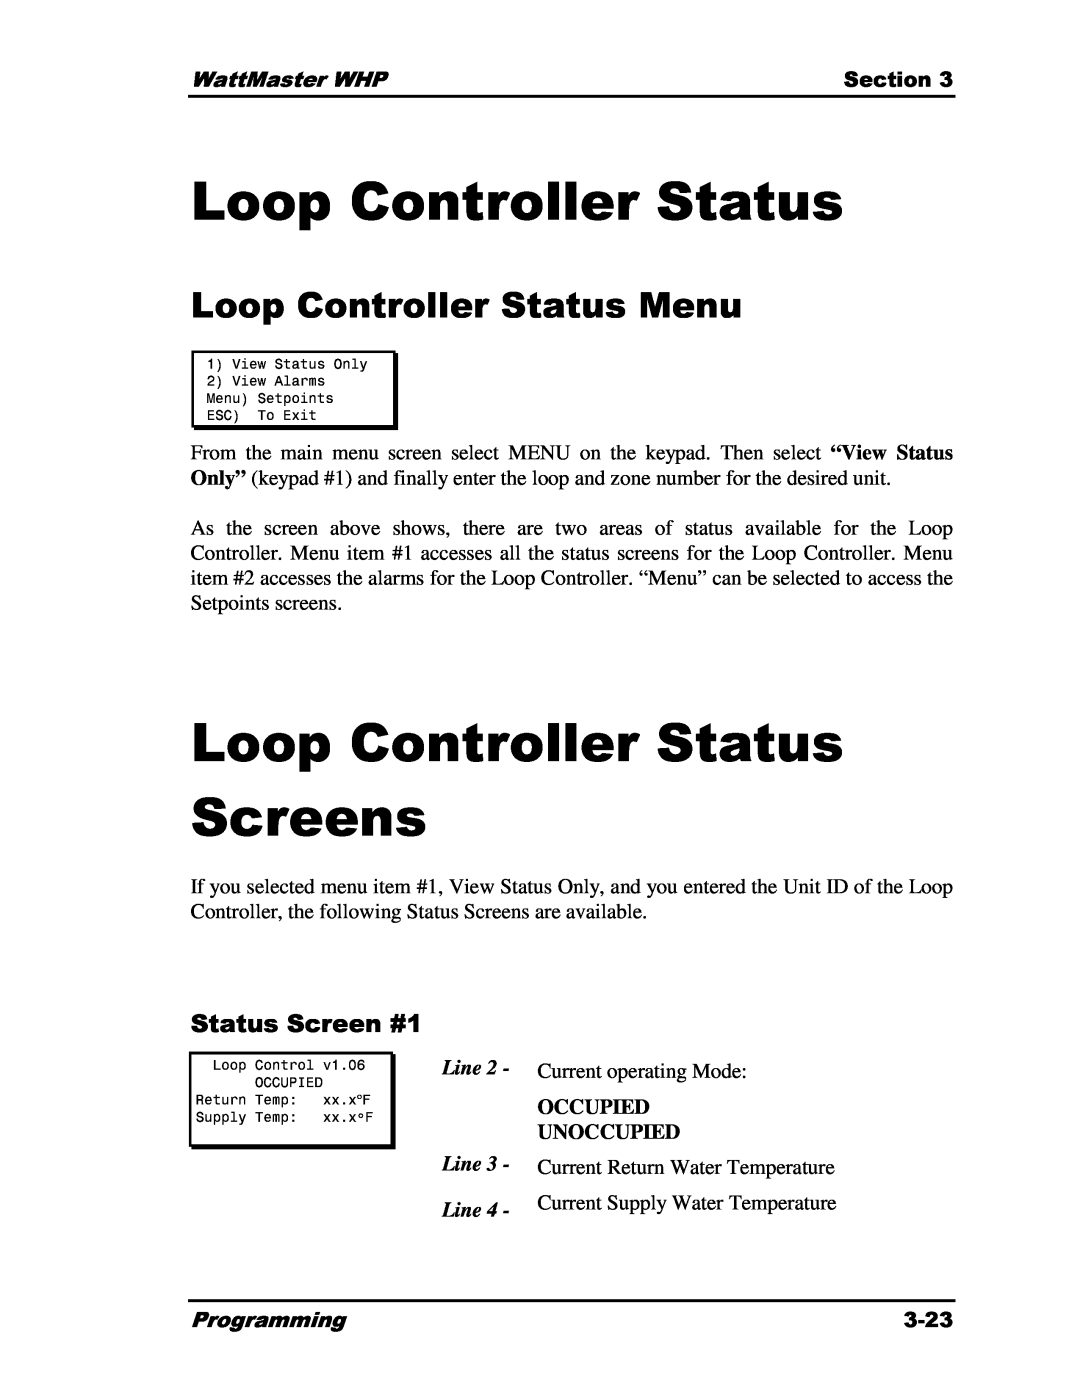 Heat Controller Water Source Heat Pump Loop Controller Status Screens, Loop Controller Status Menu, Supply, Temp:xx.xF 